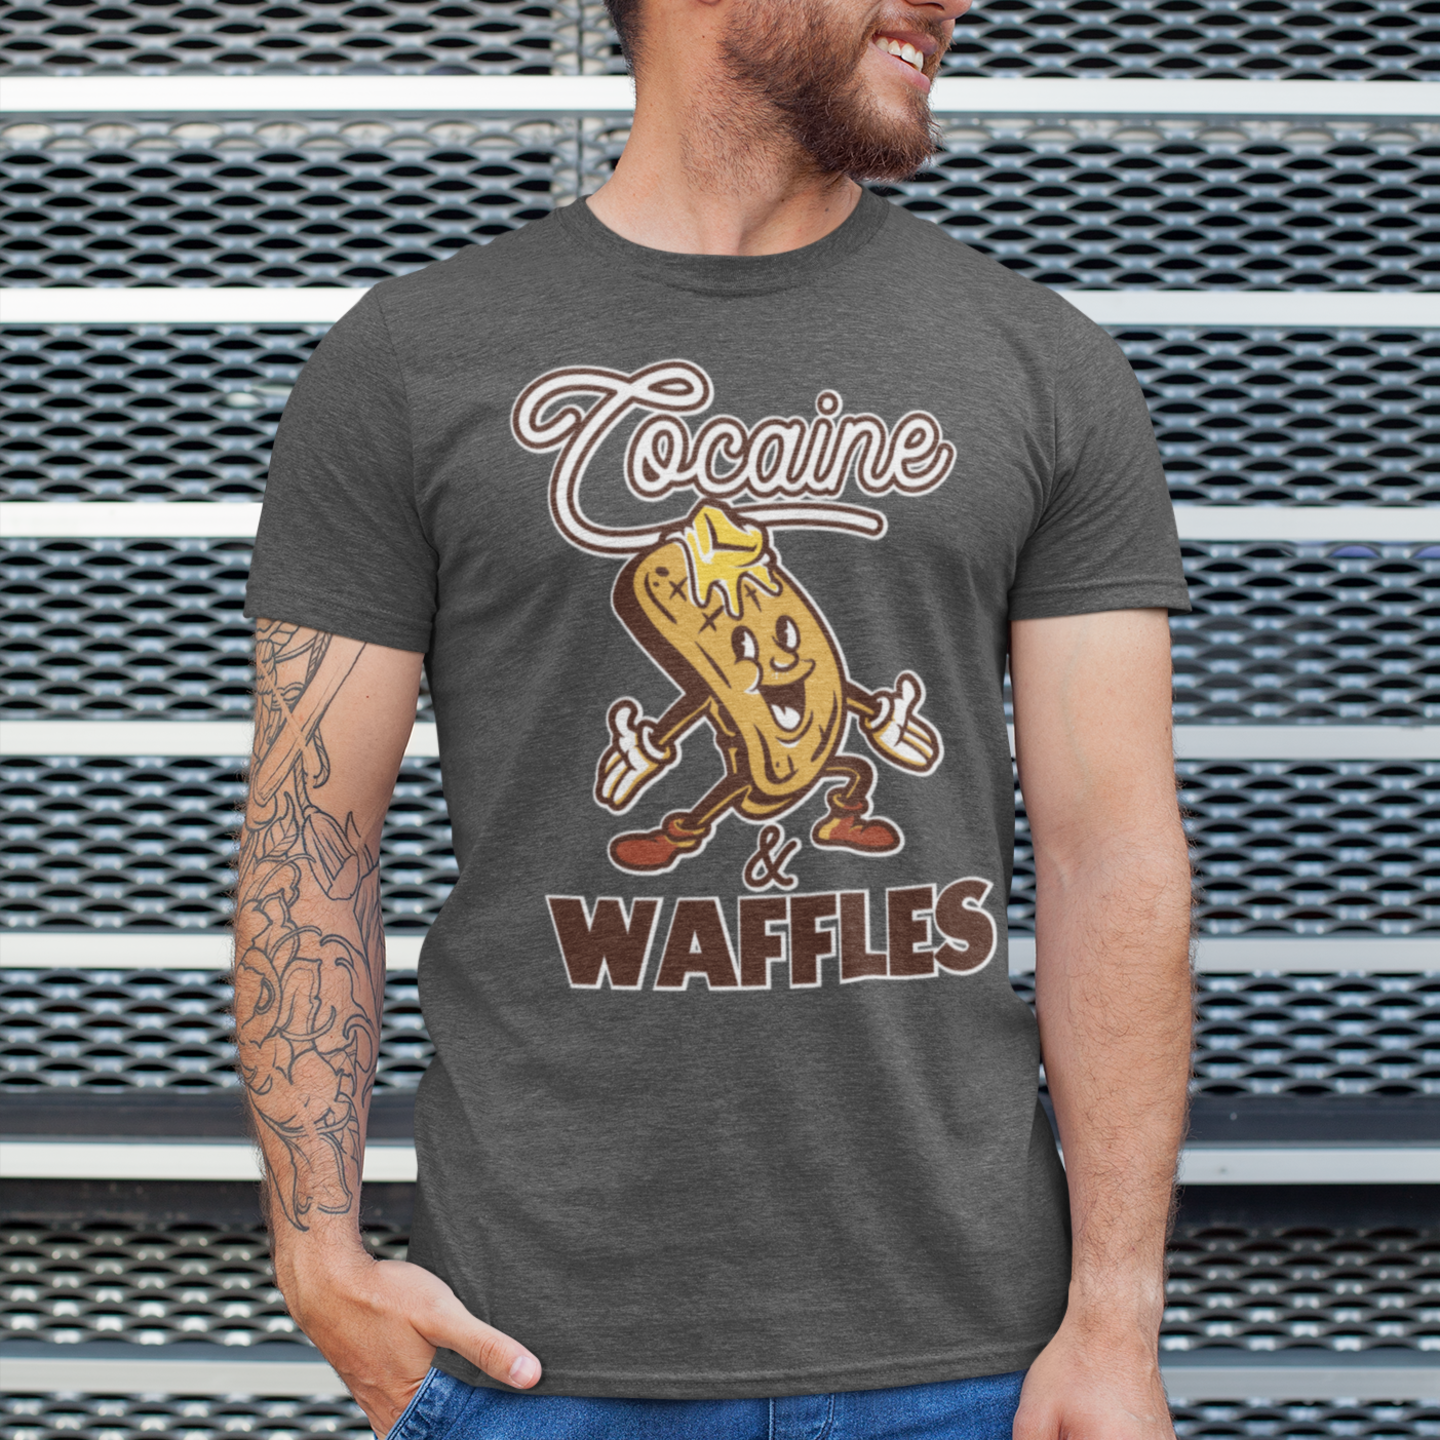 Cocaine & Waffles Tri-Blend T-Shirt